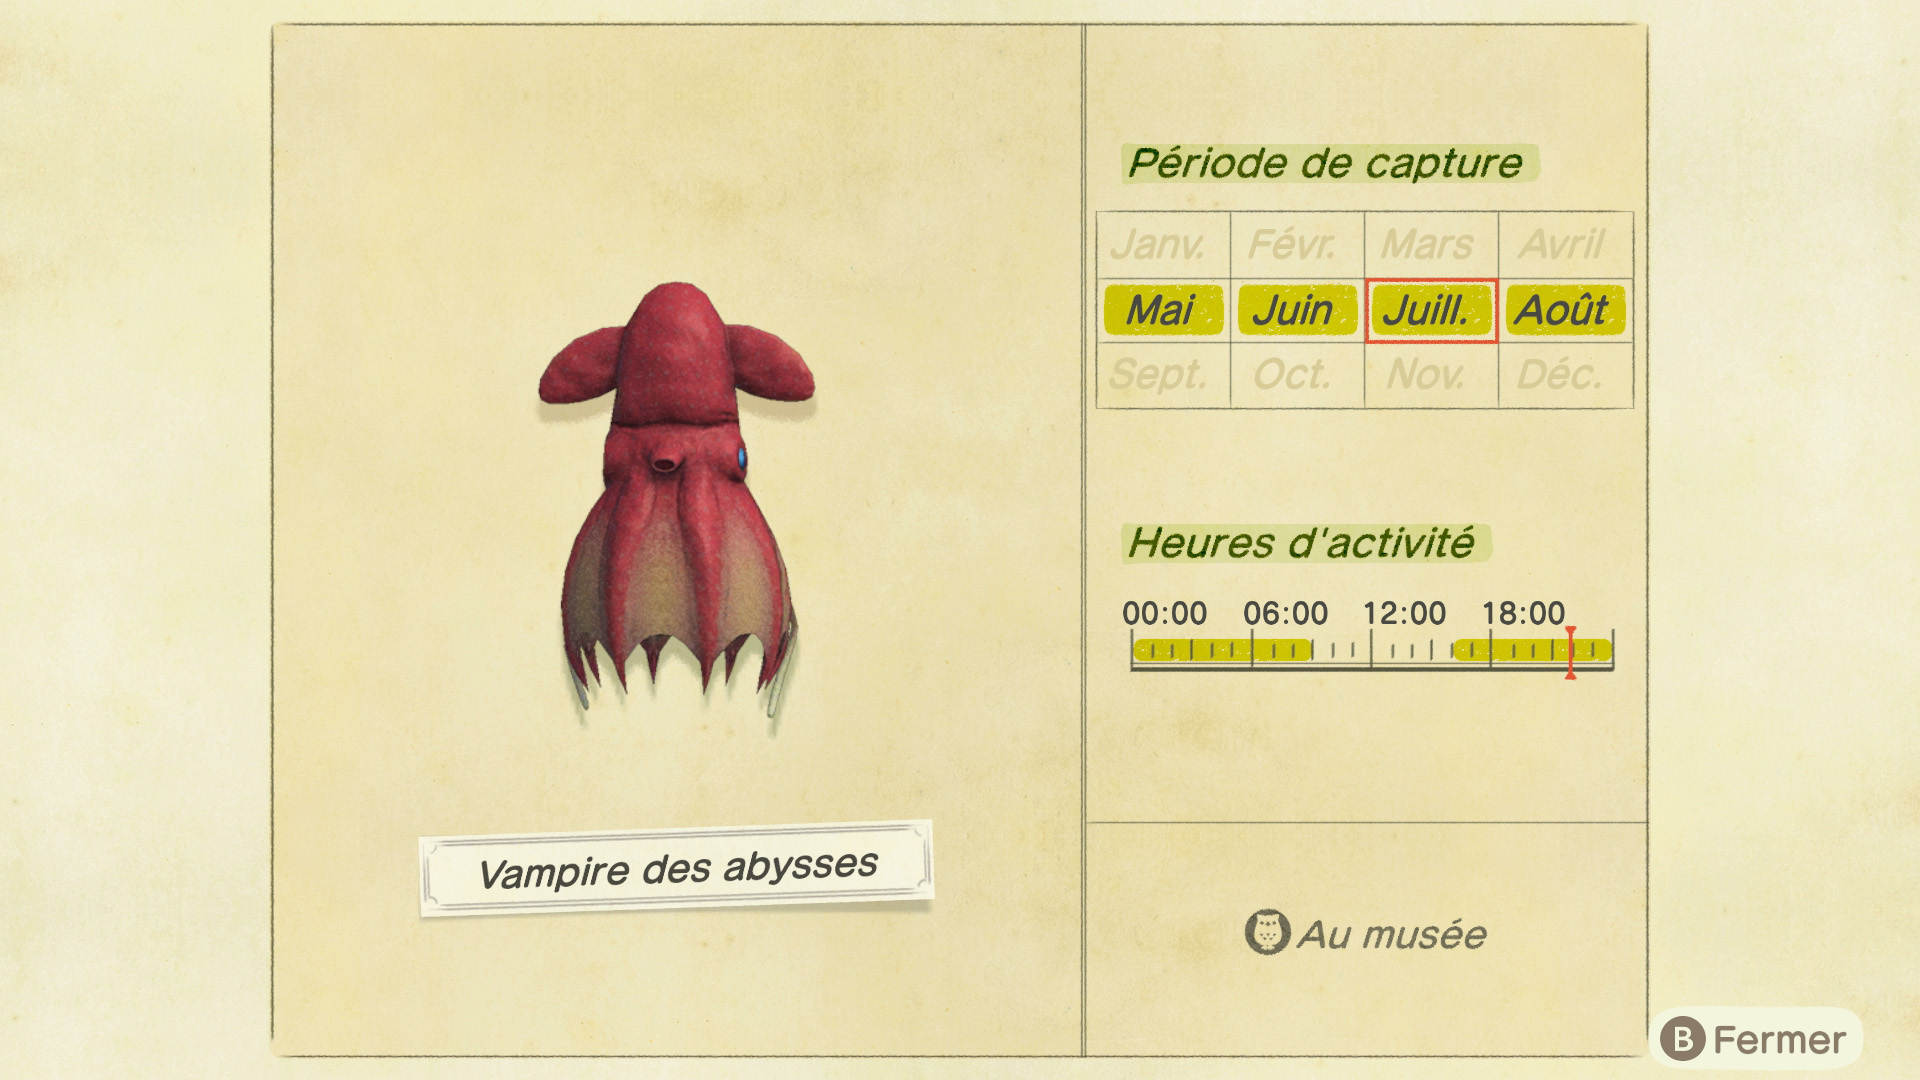 Vampire des abysses - Animal Crossing New Horizons